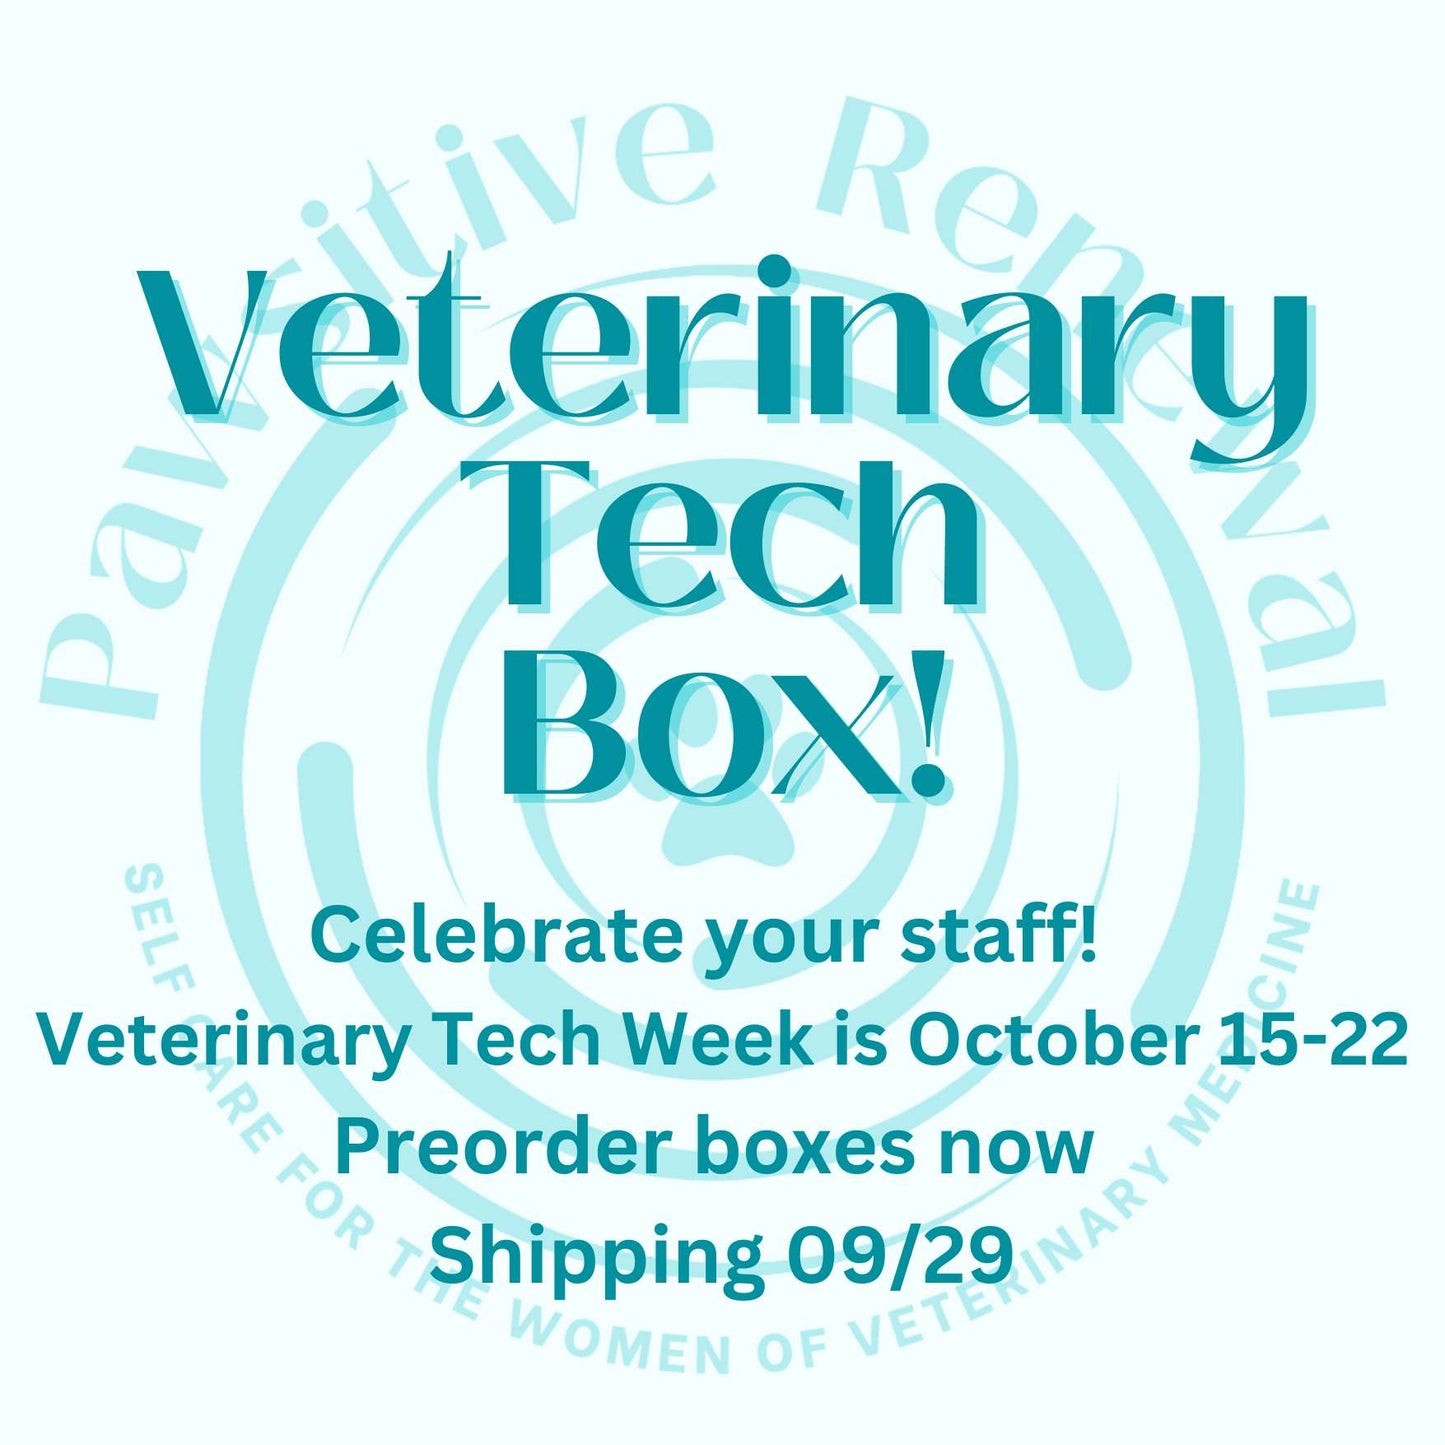 Veterinary Tech Pawsitive Renewal Box - T shirt size 3XL